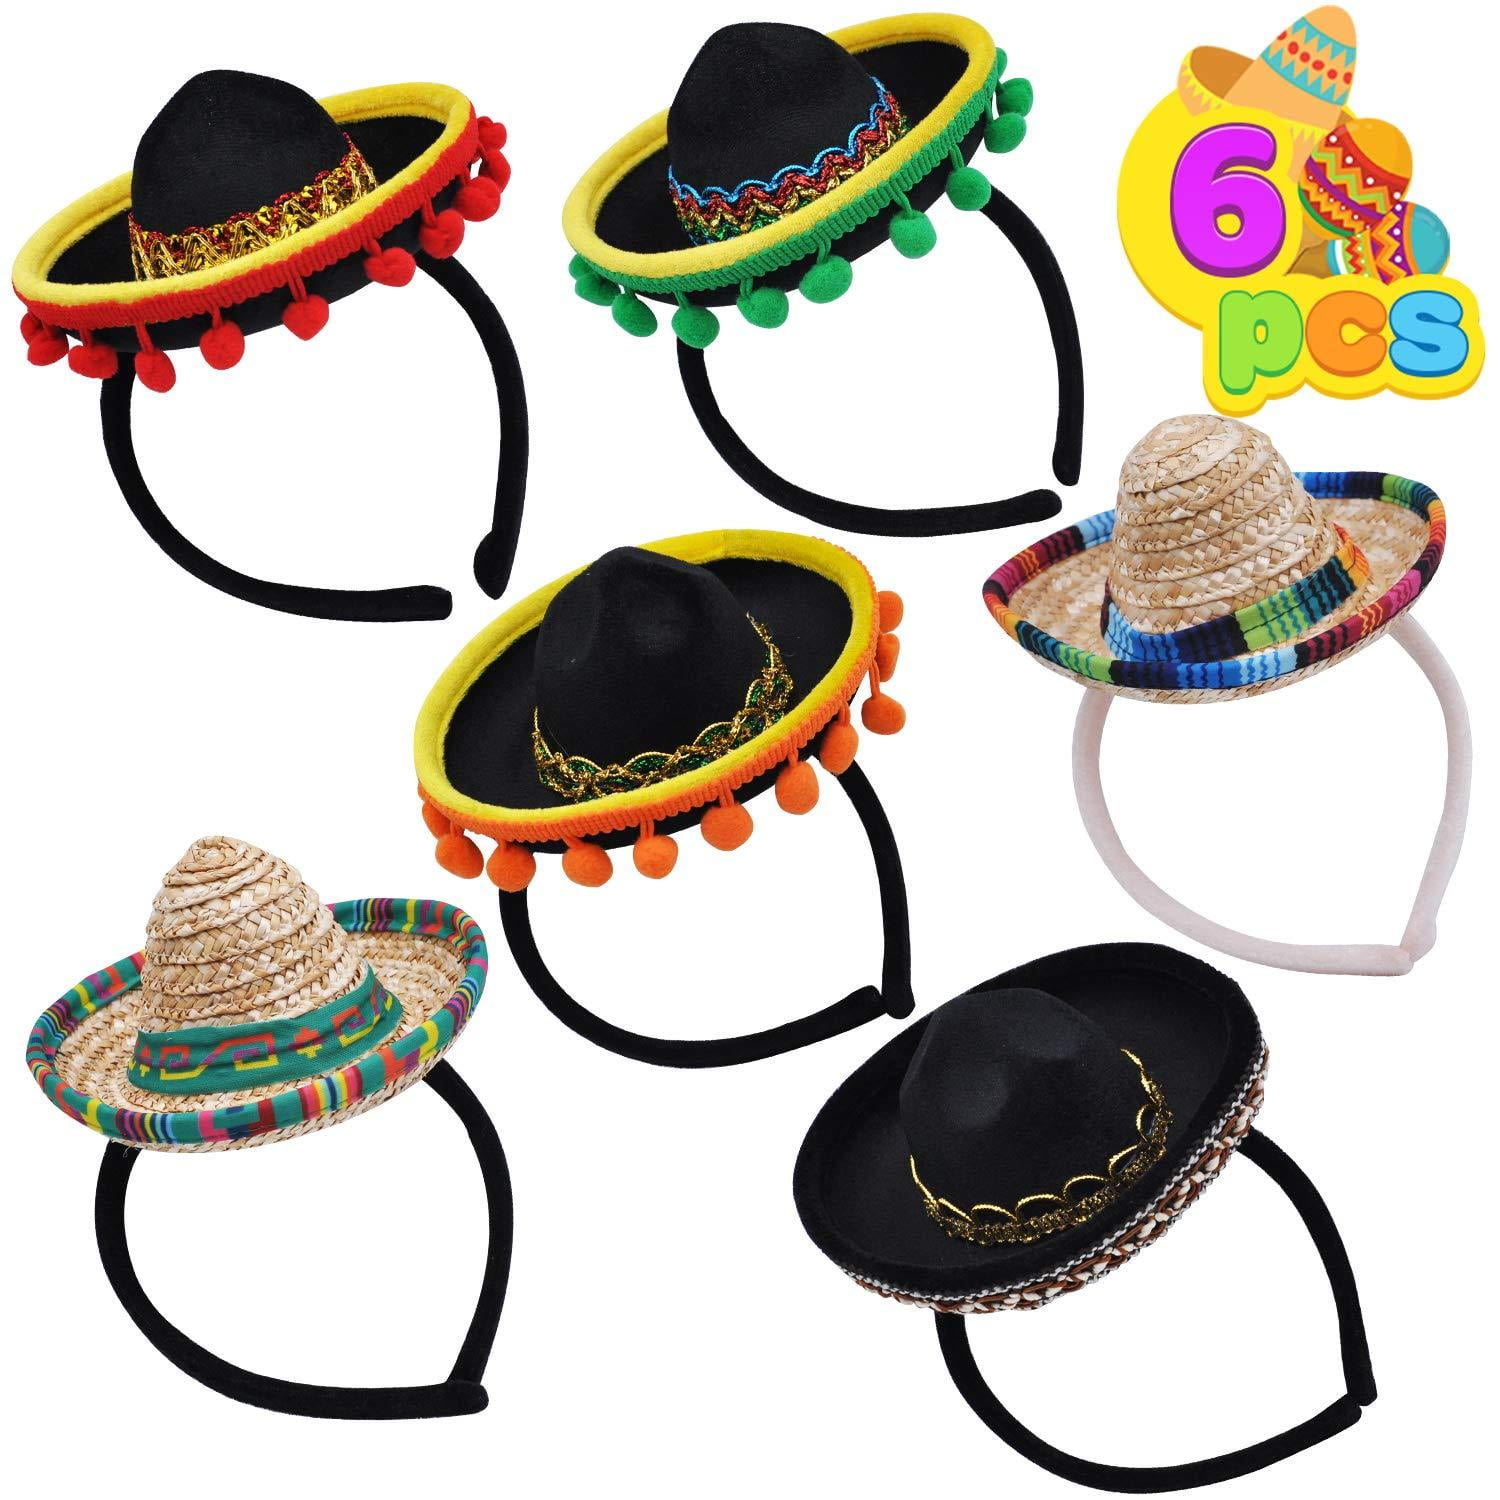 4 Pcs Cinco De Mayo Sombrero Headband Hat Mexican Sombrero Party Hats Decorations Fiesta Carnival Festivals Birthday Coco Mexican Theme Party Supplies Photo Props